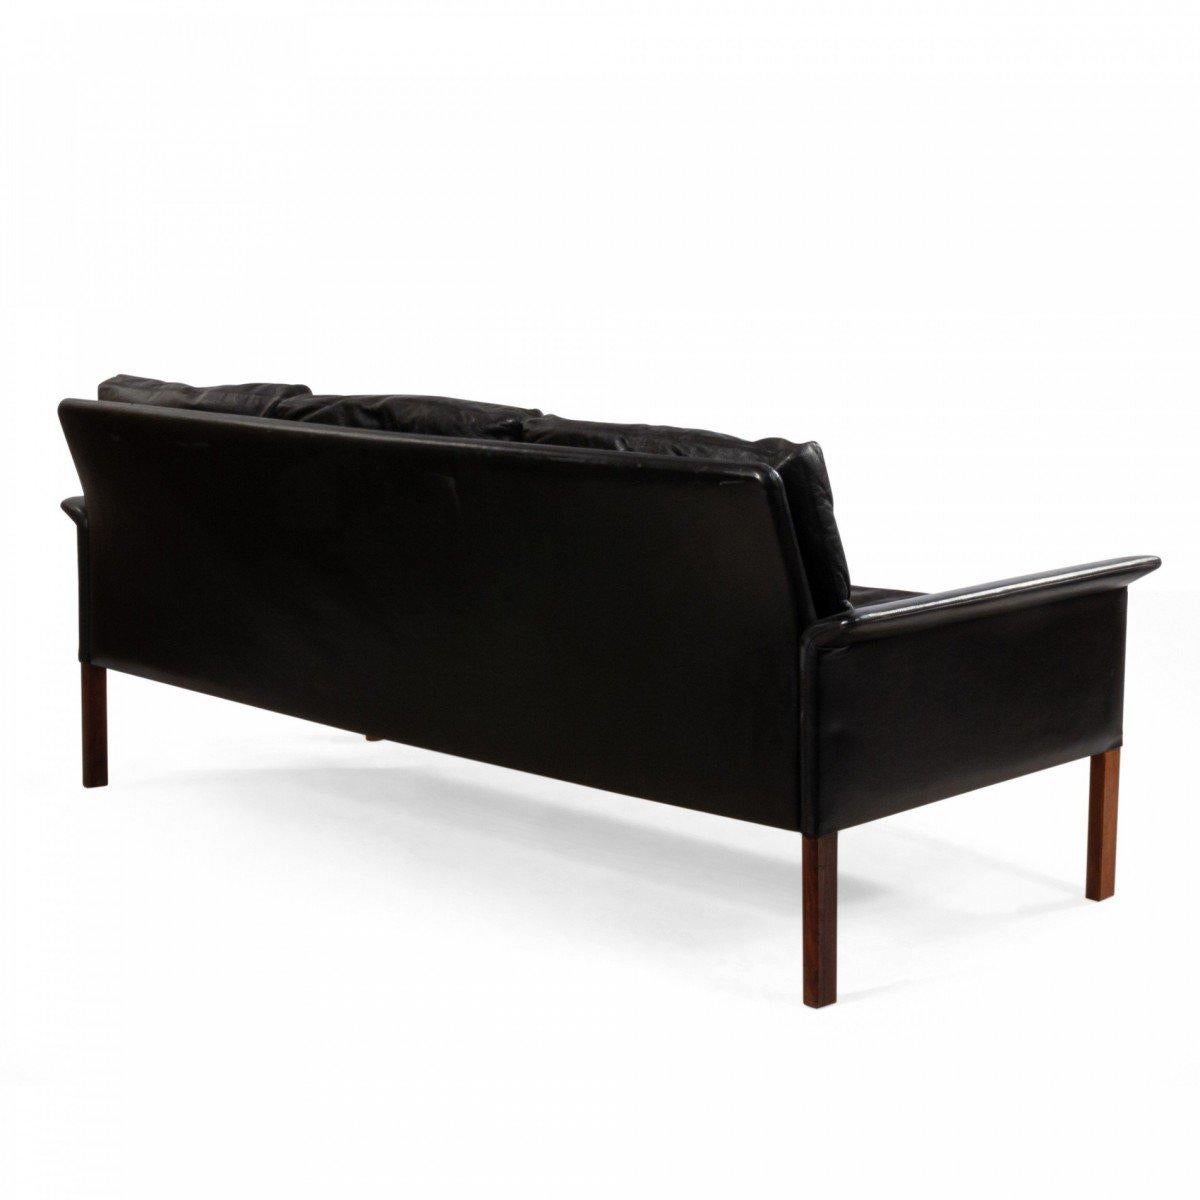 20th Century Contemporary Black Leather Sofa